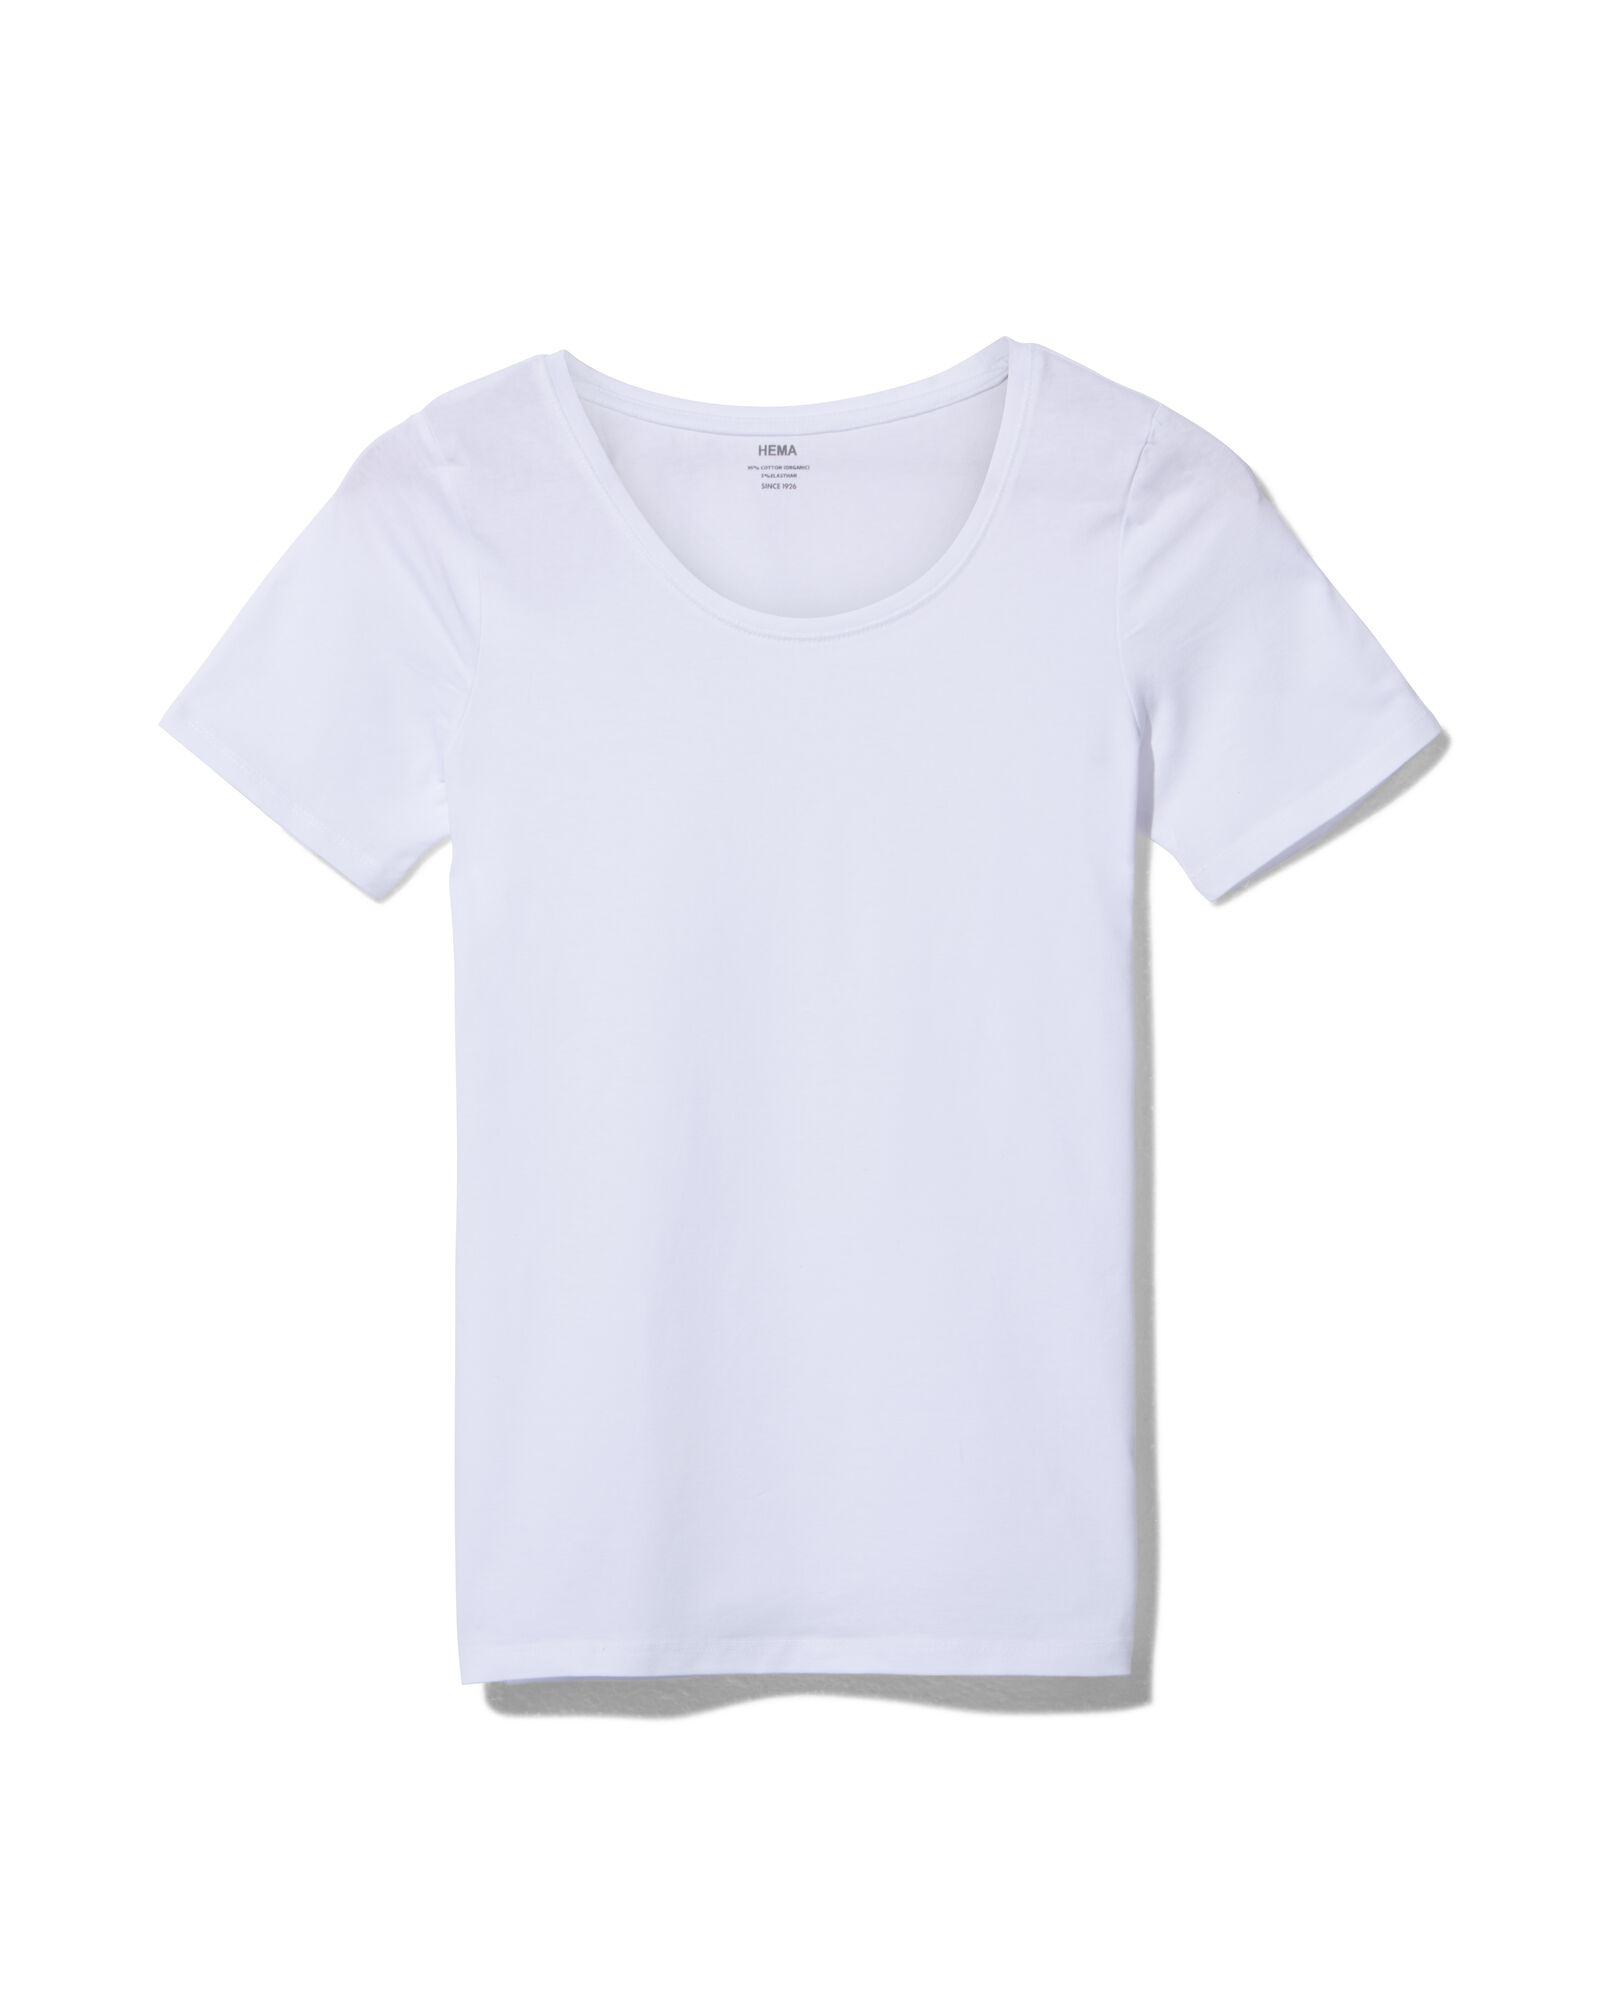 Image of HEMA Dames T-shirt Wit (wit)